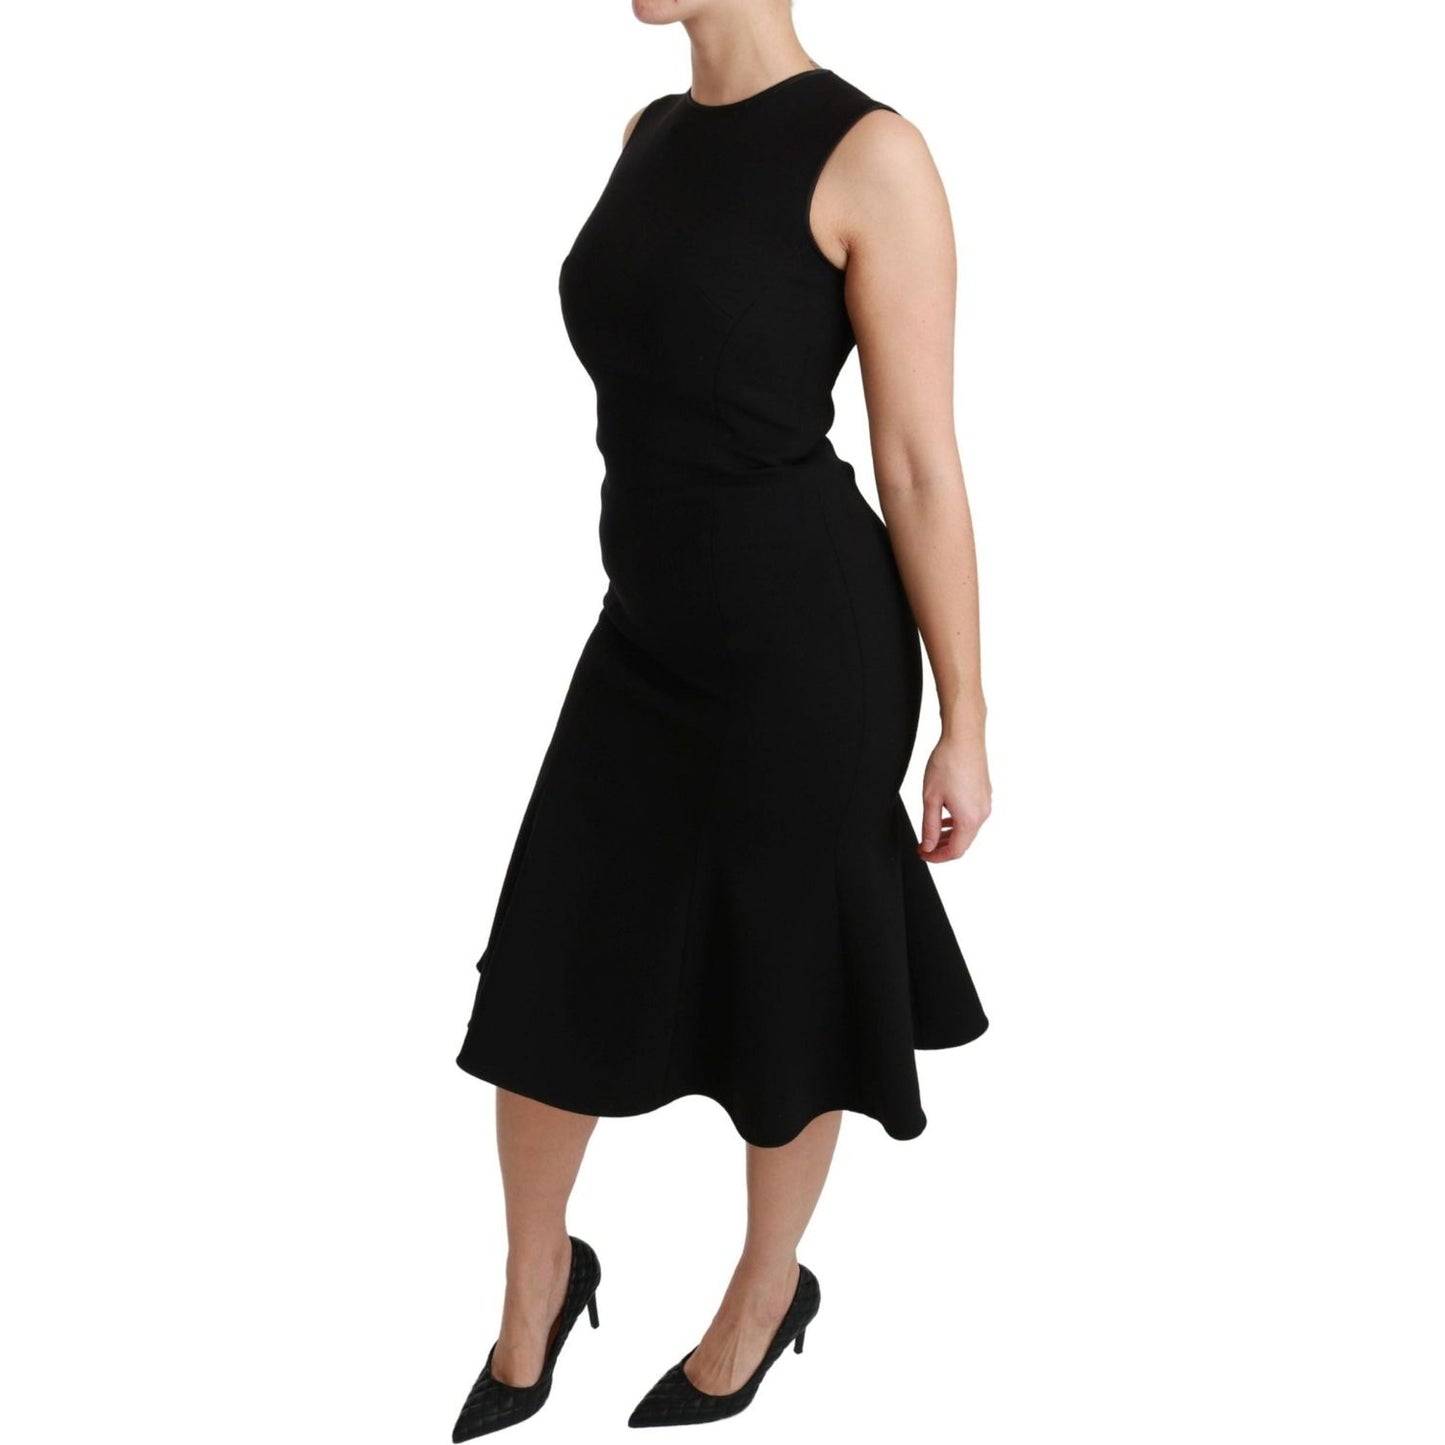 Dolce & Gabbana Elegant Black Fit Flare Wool Blend Dress black-fit-flare-wool-stretch-sheath-dress WOMAN DRESSES IMG_6966-scaled-5b00becb-18c.jpg